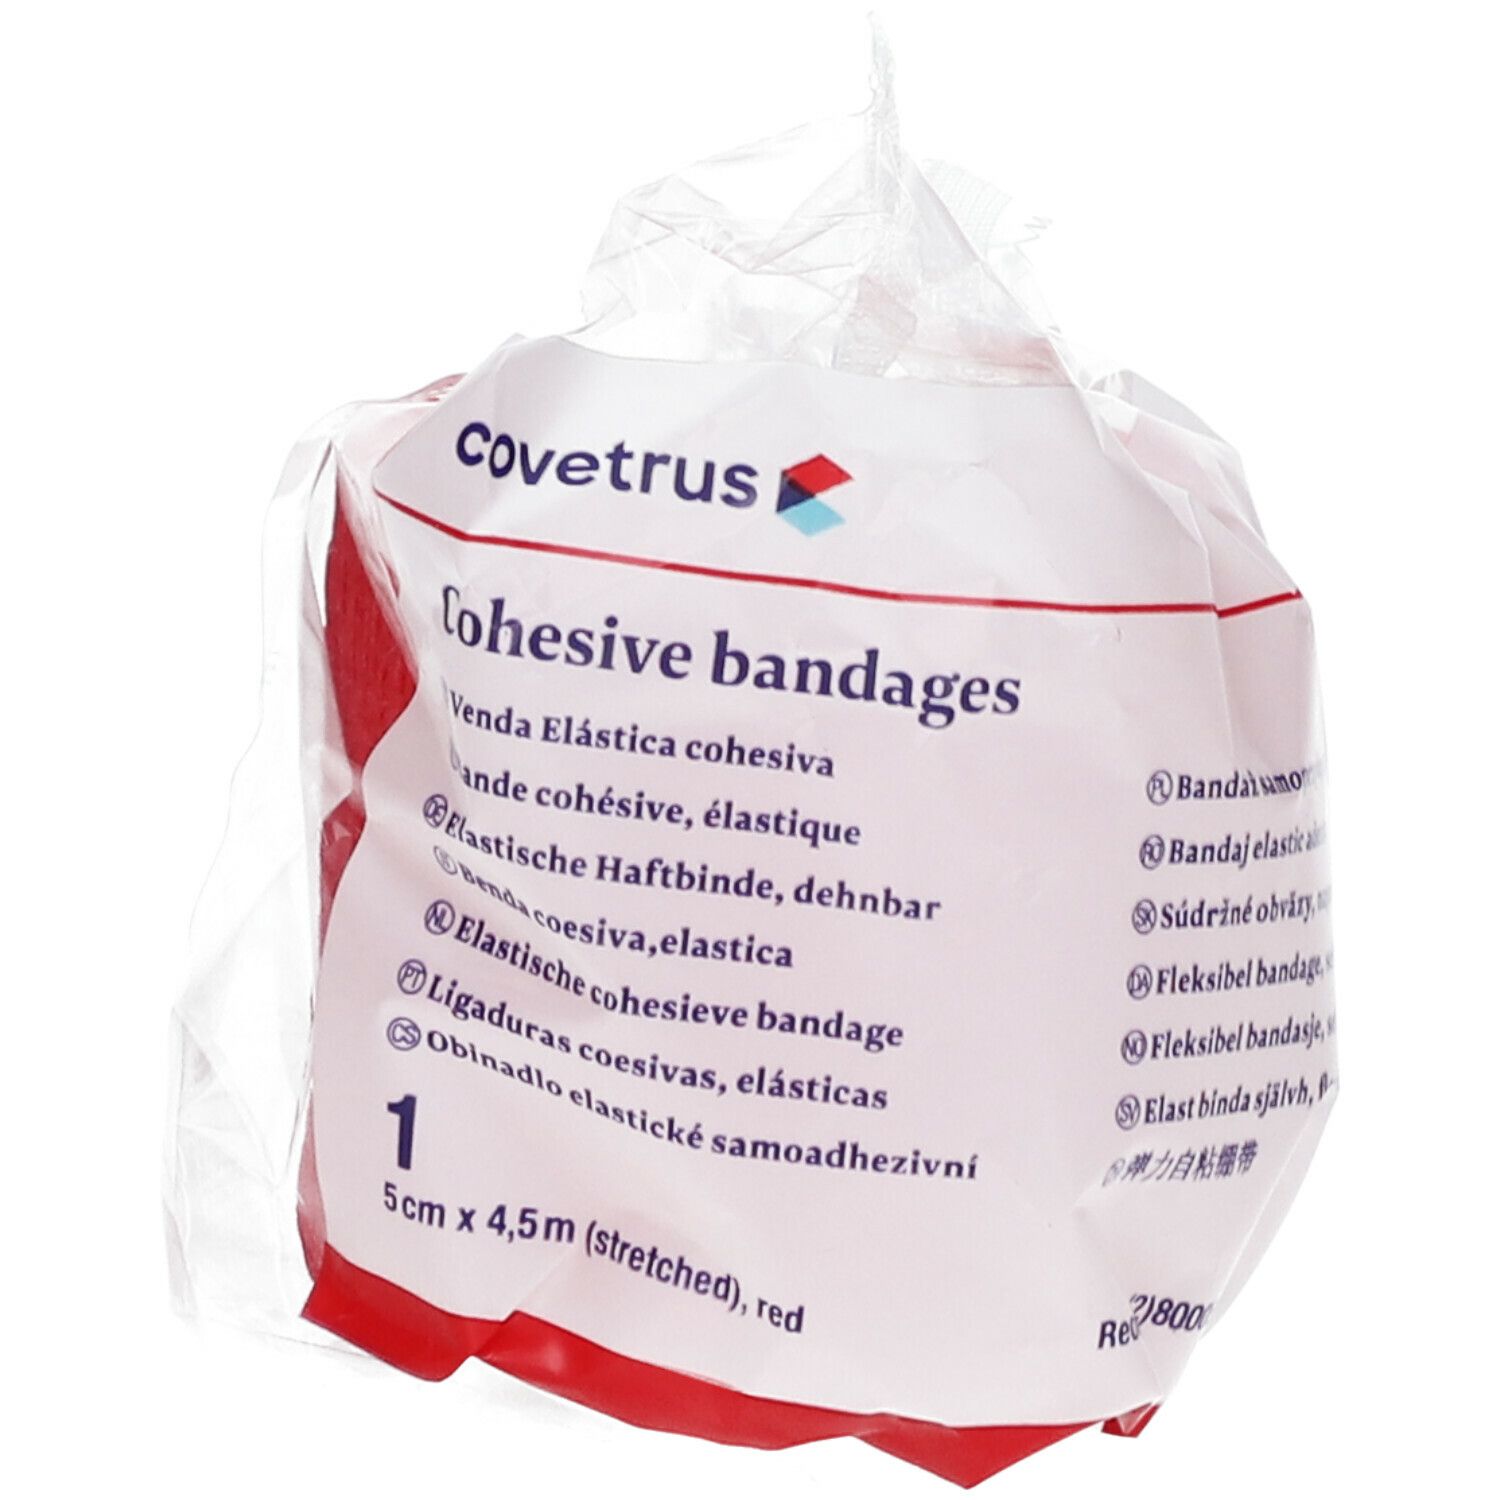 covetrus Cohesive bandages 5cm x 4,5m red